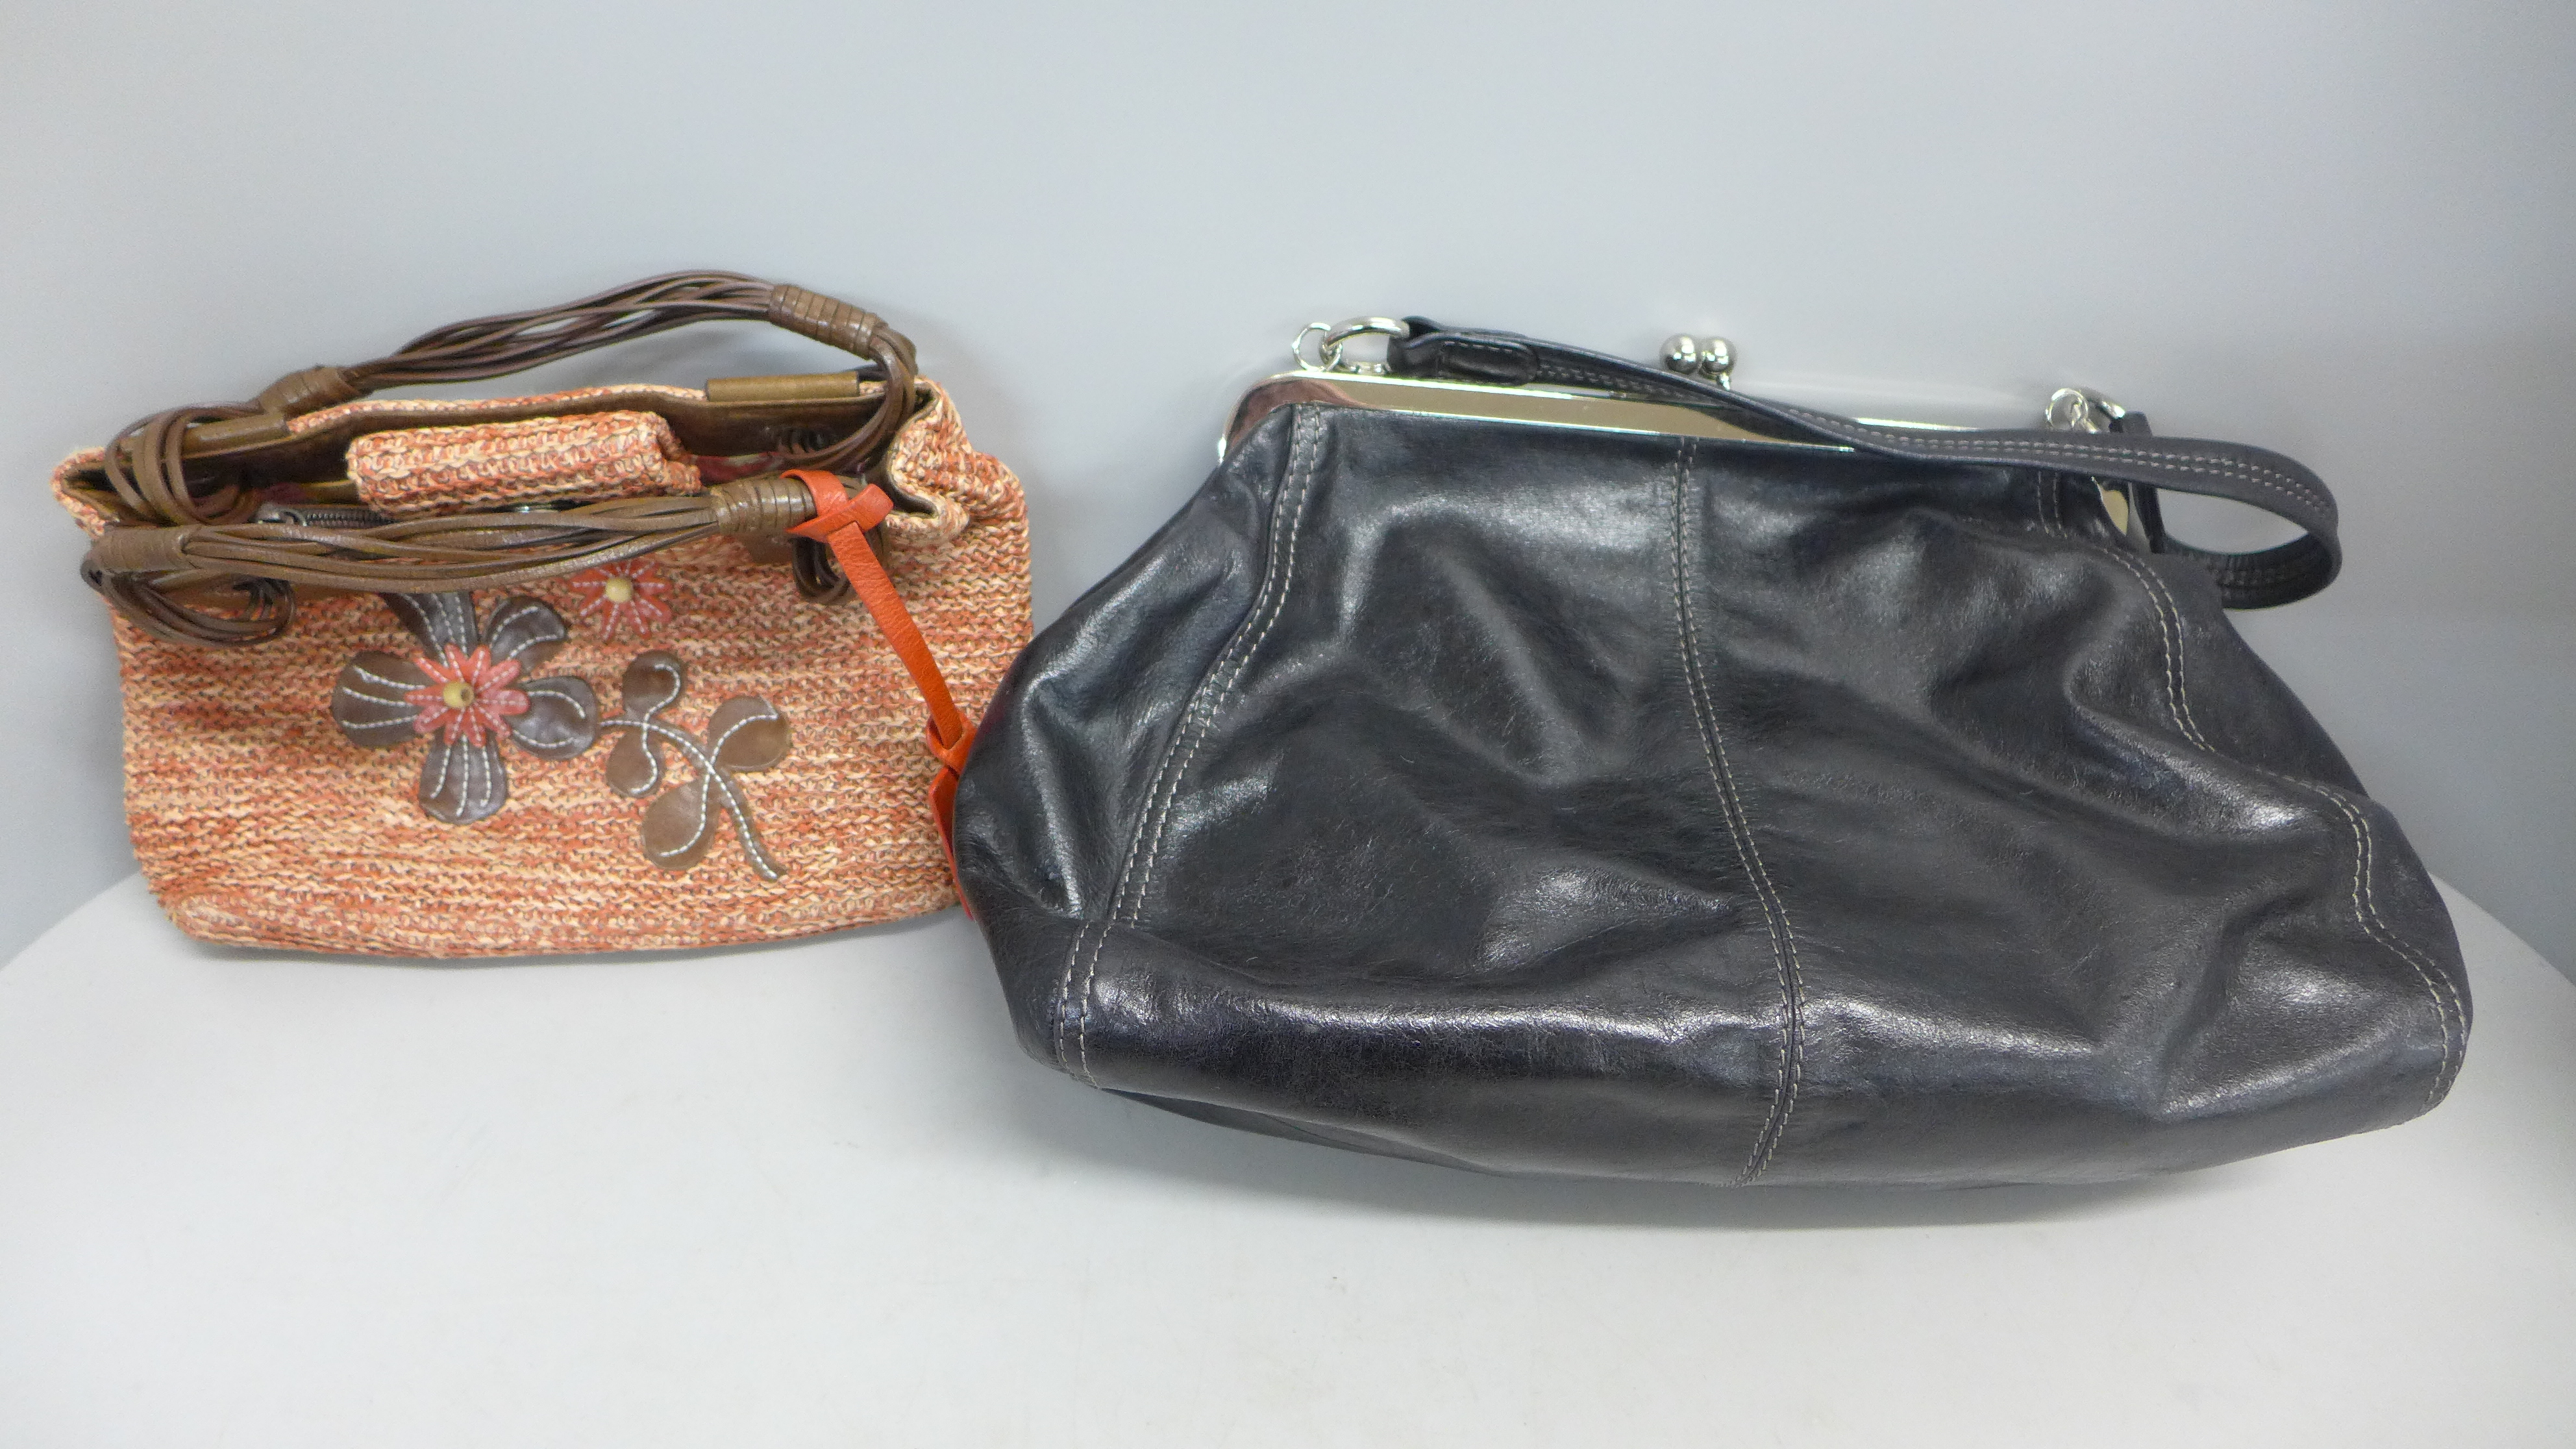 Two Tula handbags